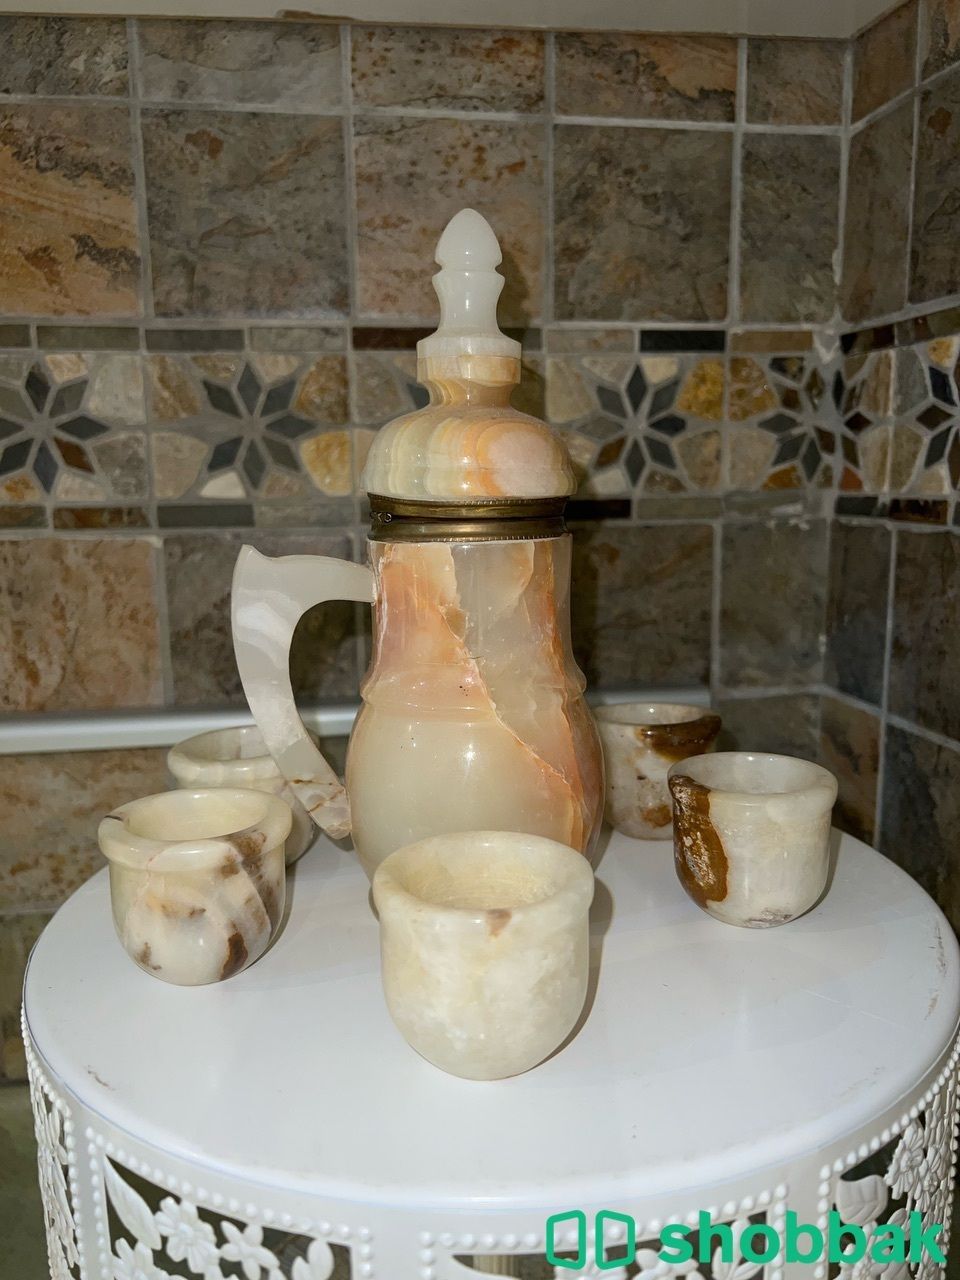 اطباق زجاج اصليات ال3 ب550550 Shobbak Saudi Arabia